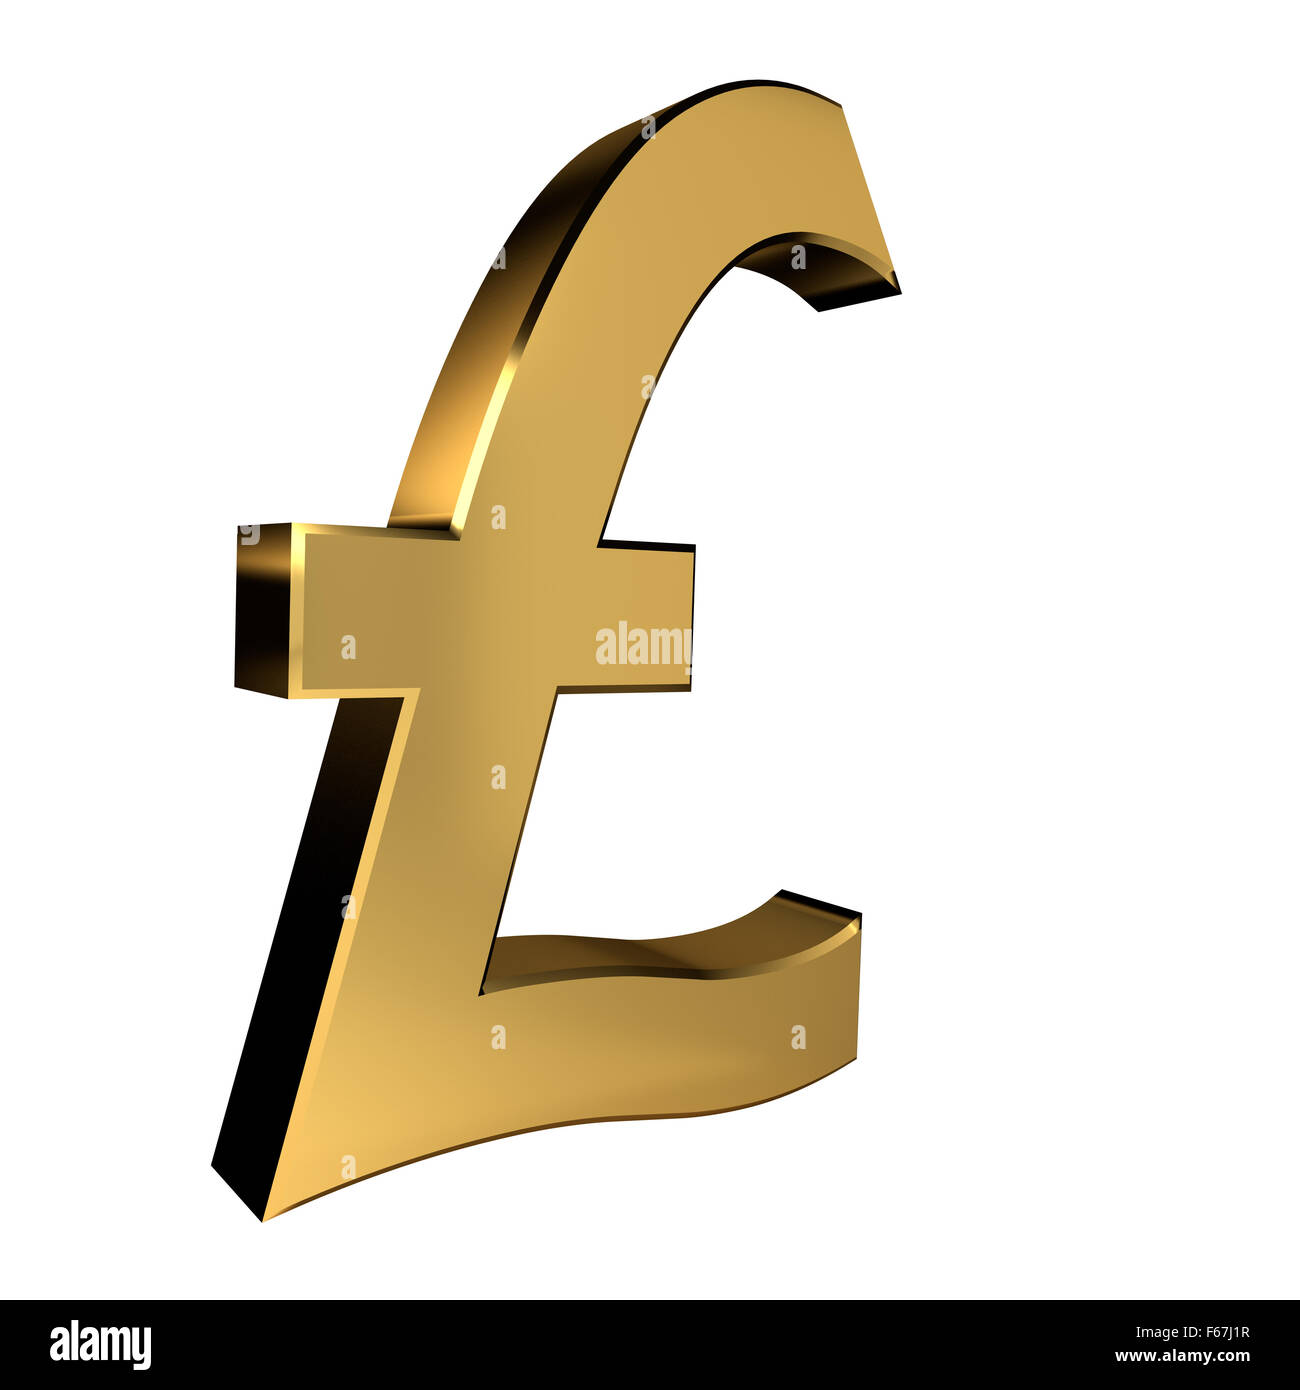 Gold Colored Pound Symbol Stock Photo